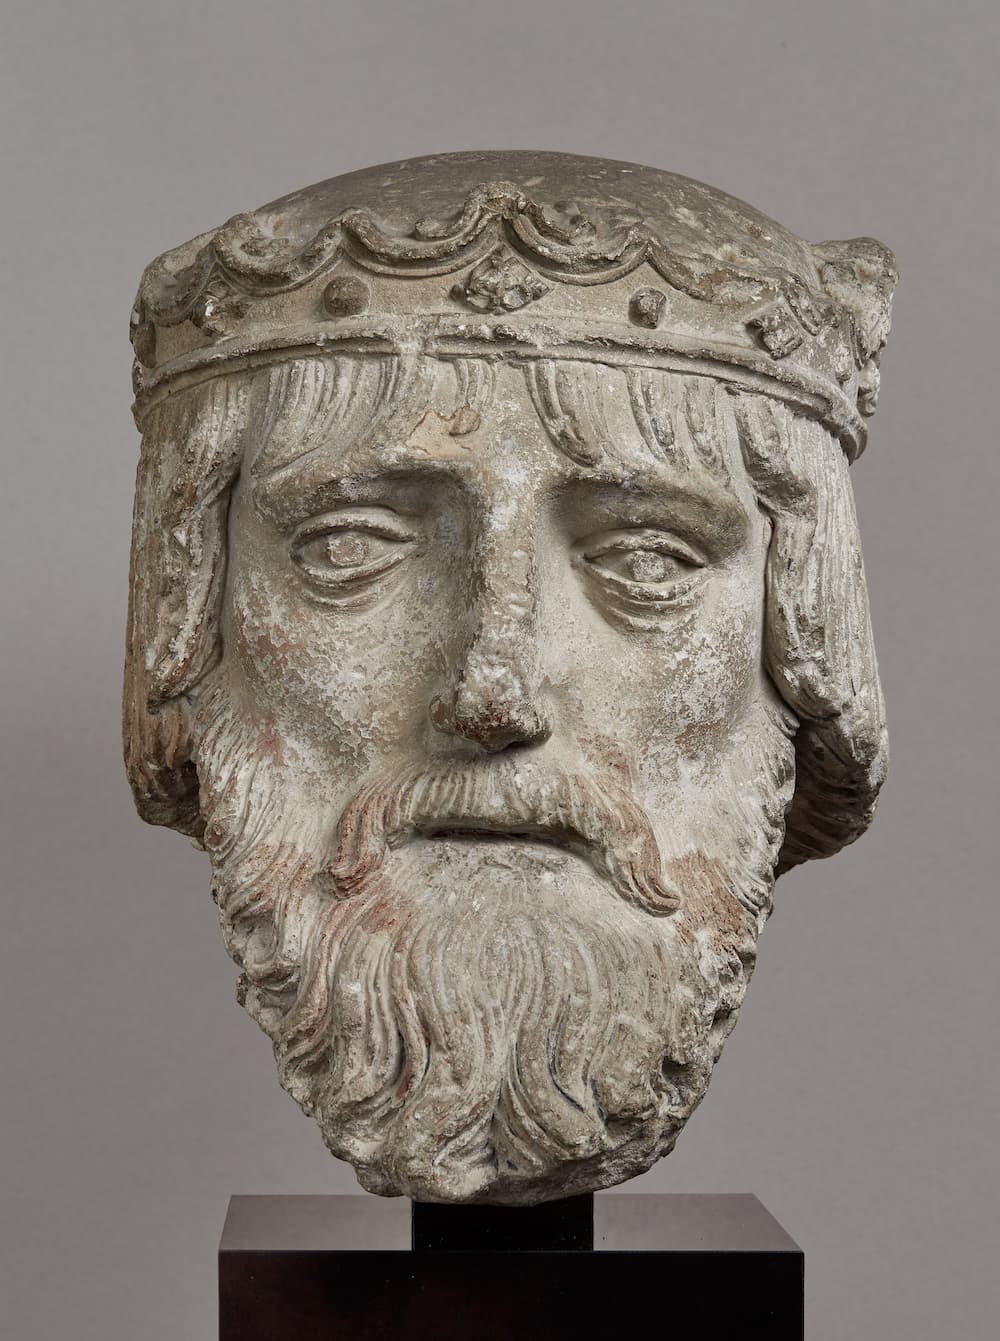 King's head, France, 14th century, stone